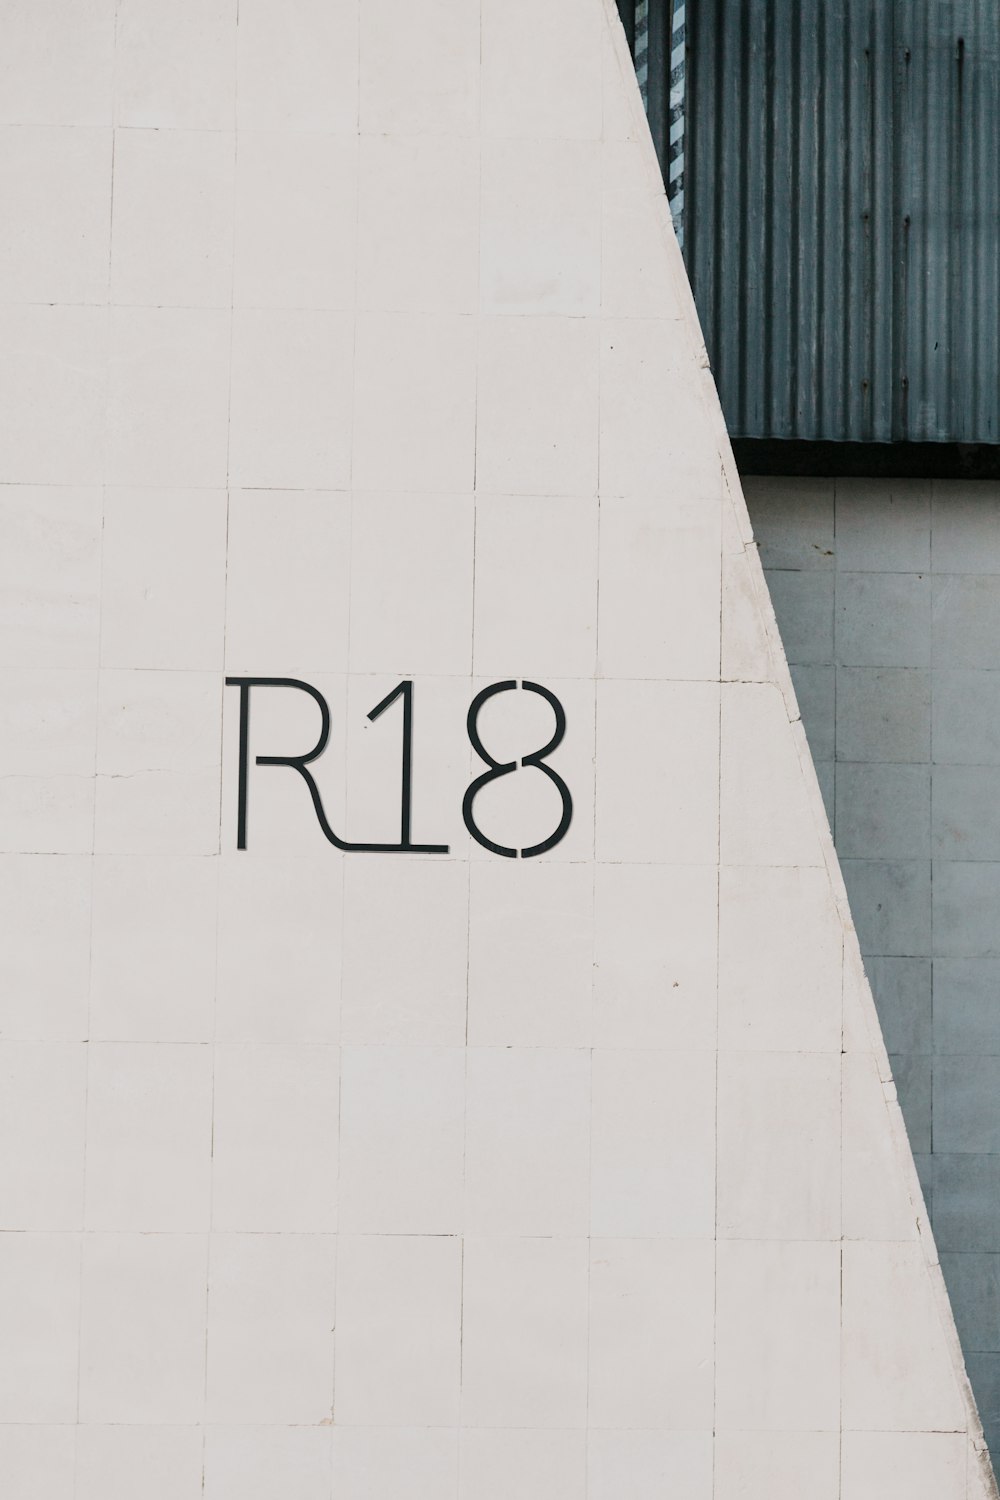 R18 building